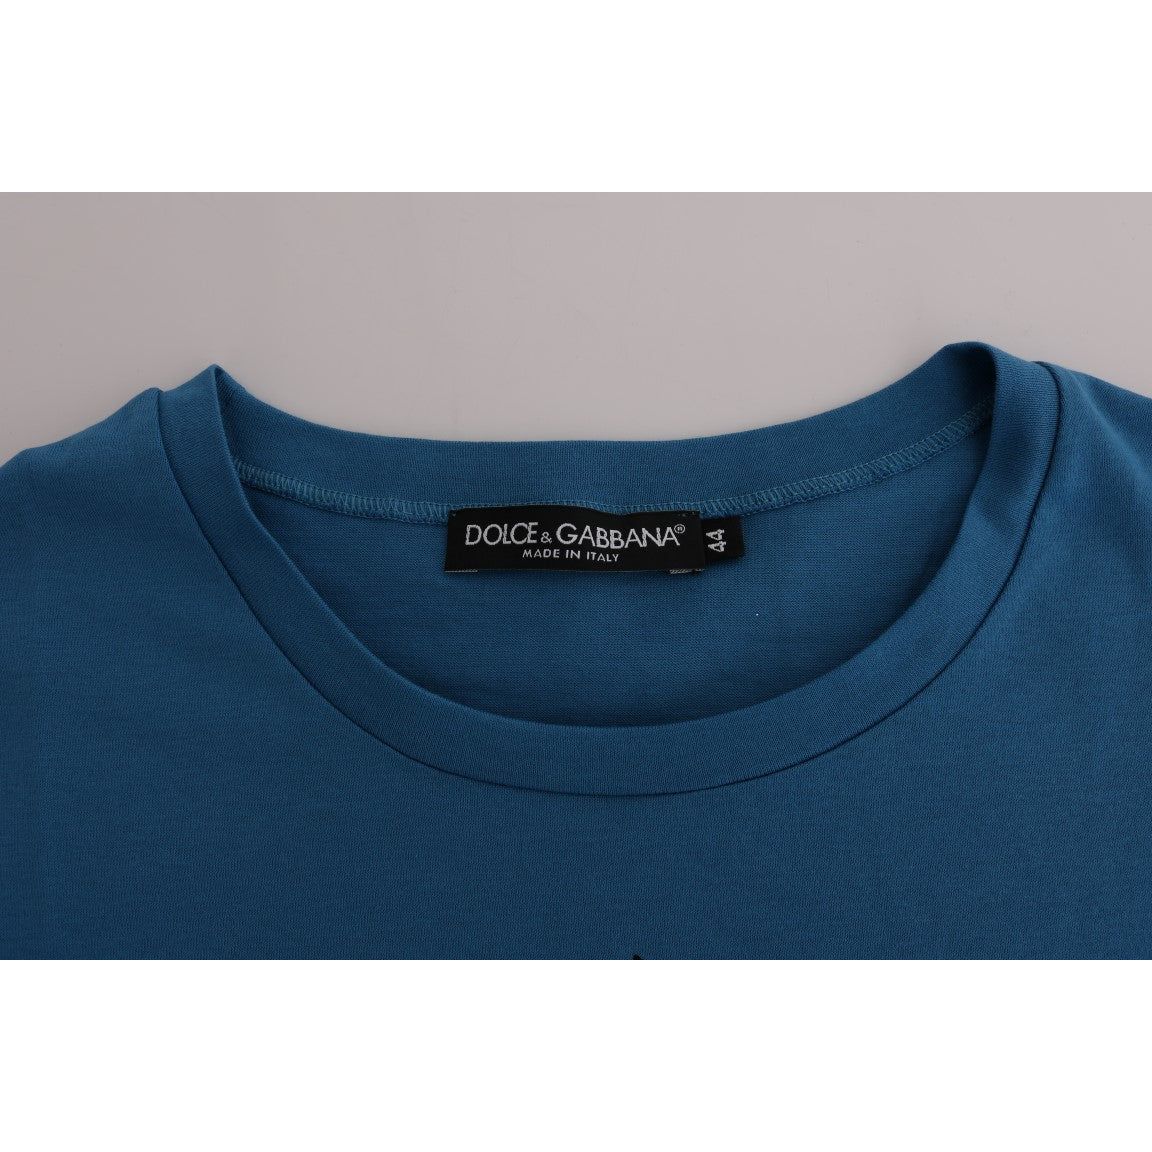 Dolce & Gabbana Chic Blue Cotton Tee with 2017 Print blue-cotton-2017-motive-t-shirt